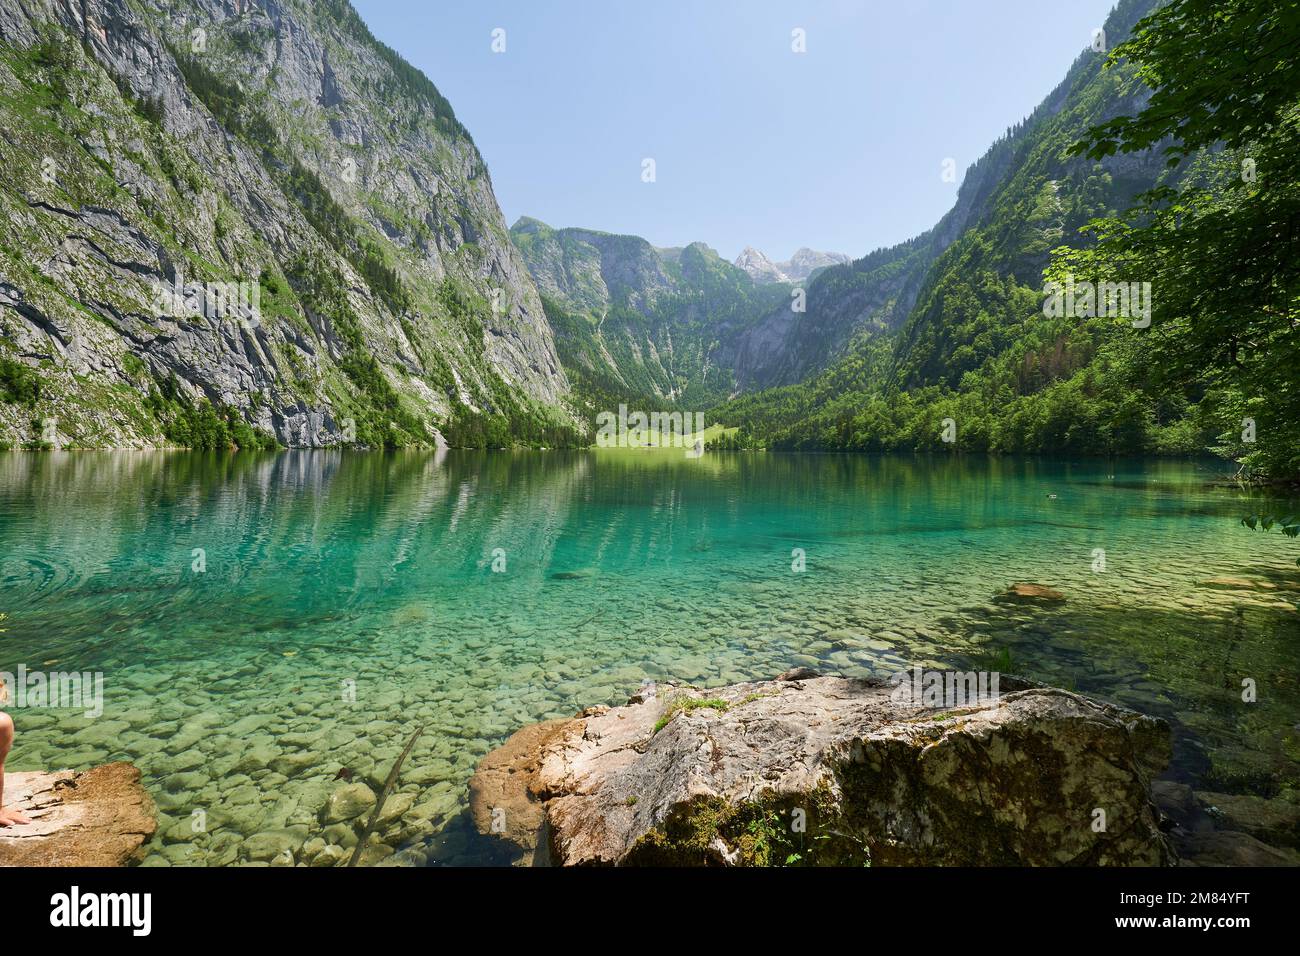 Kristallklarer Obersee im Nationalpark Berchtesgaden Foto Stock